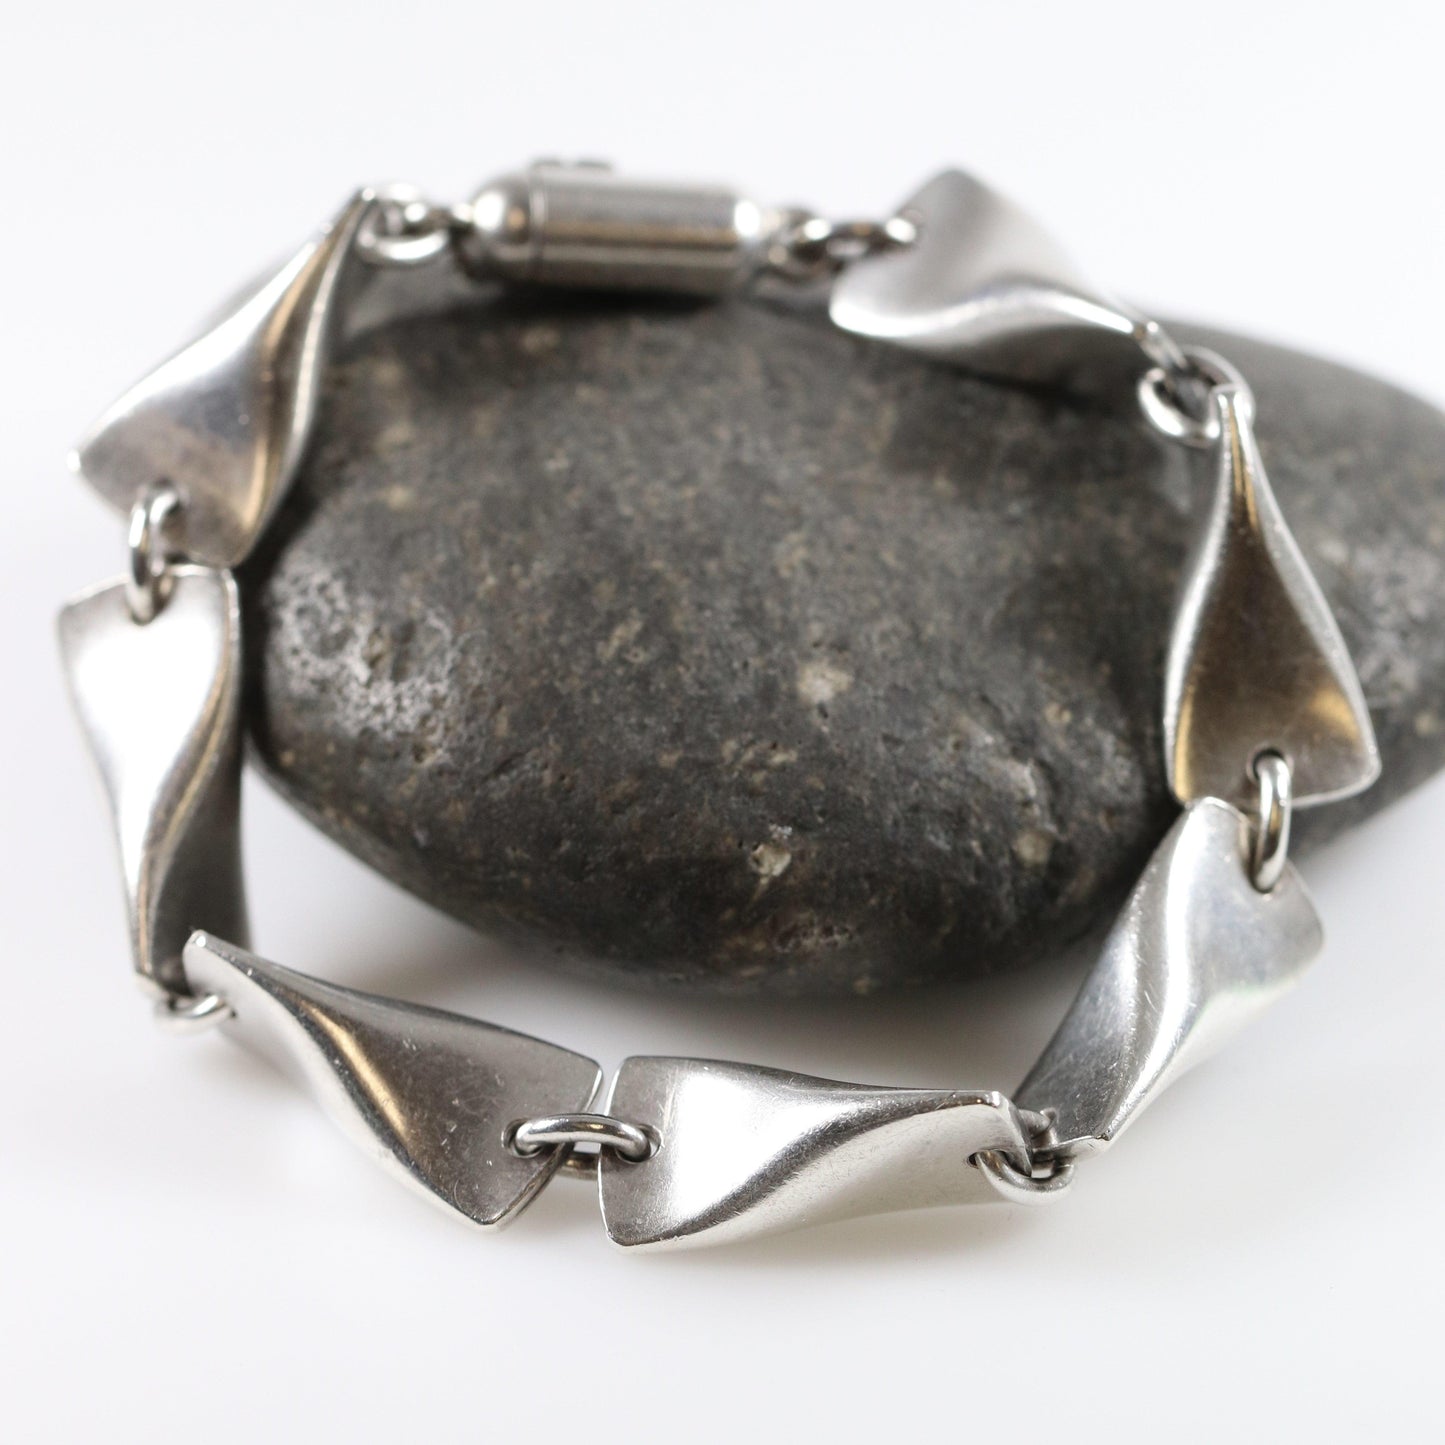 Vintage Georg Jensen Jewelry | Edvard Kindt-Larson Butterfly Modernist Bracelet 104B - Carmel Fine Silver Jewelry